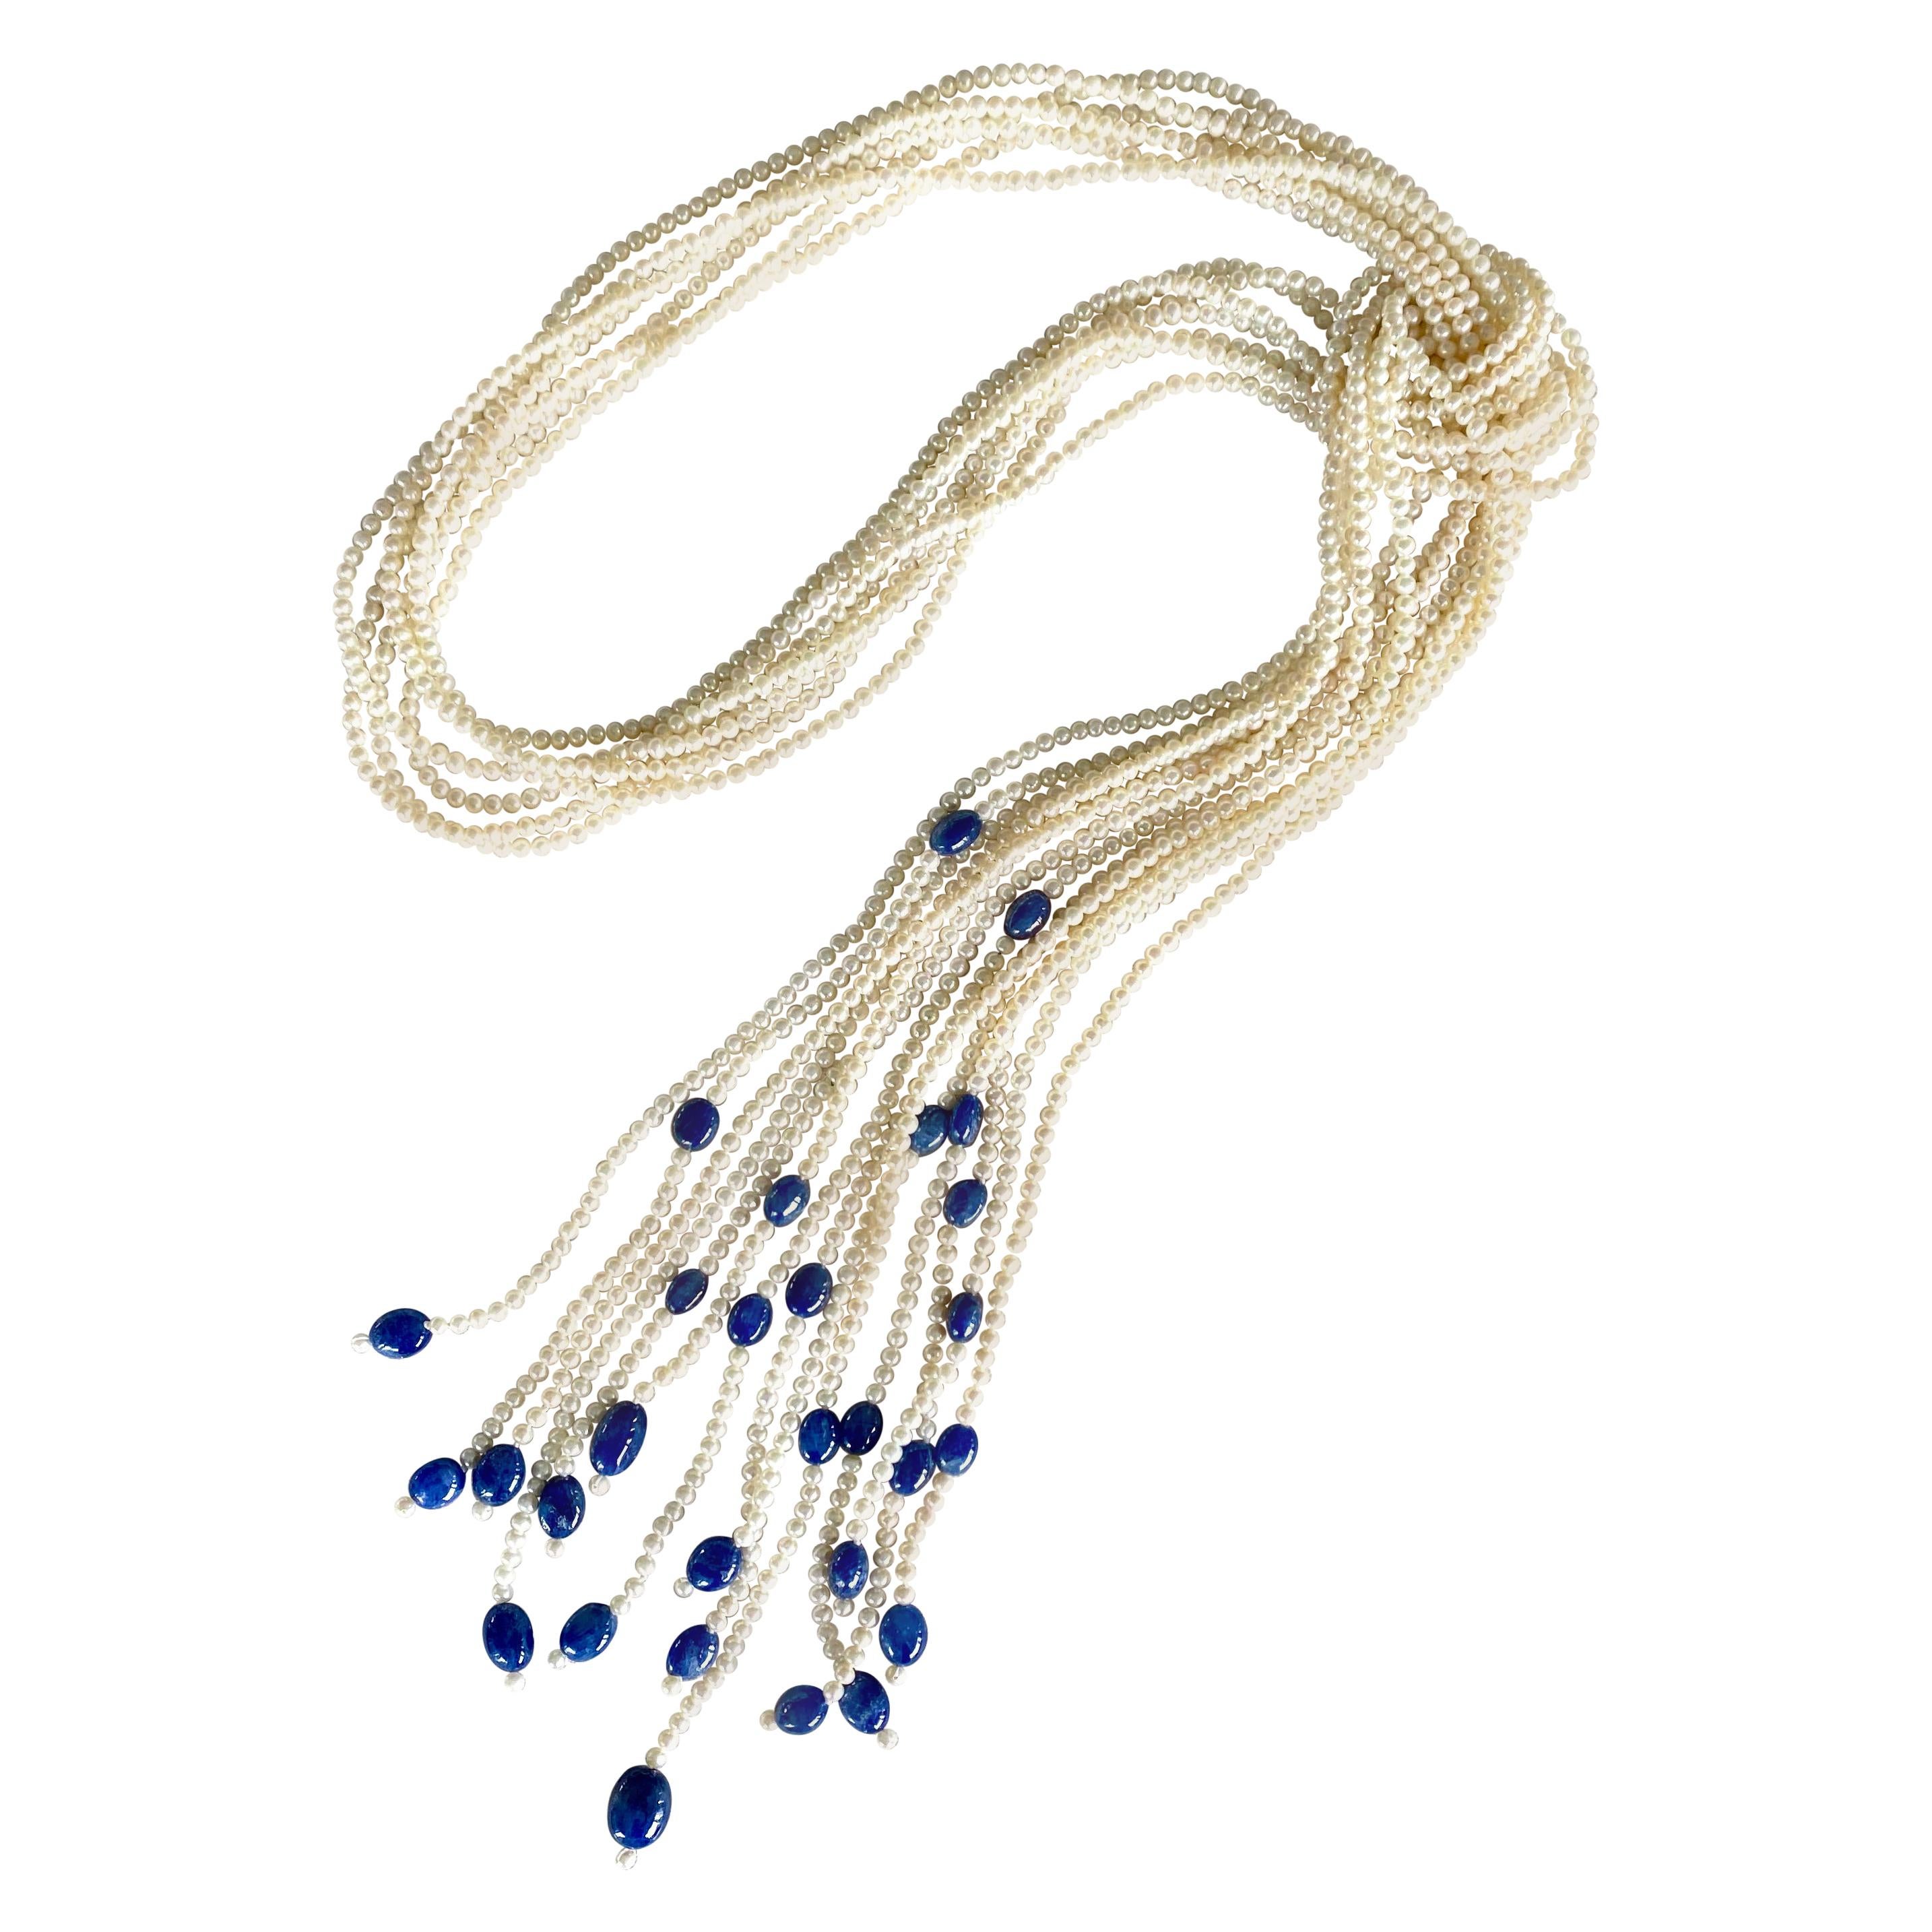 Collier à sept rangs de perles naturelles blanches et perles de saphir bleu